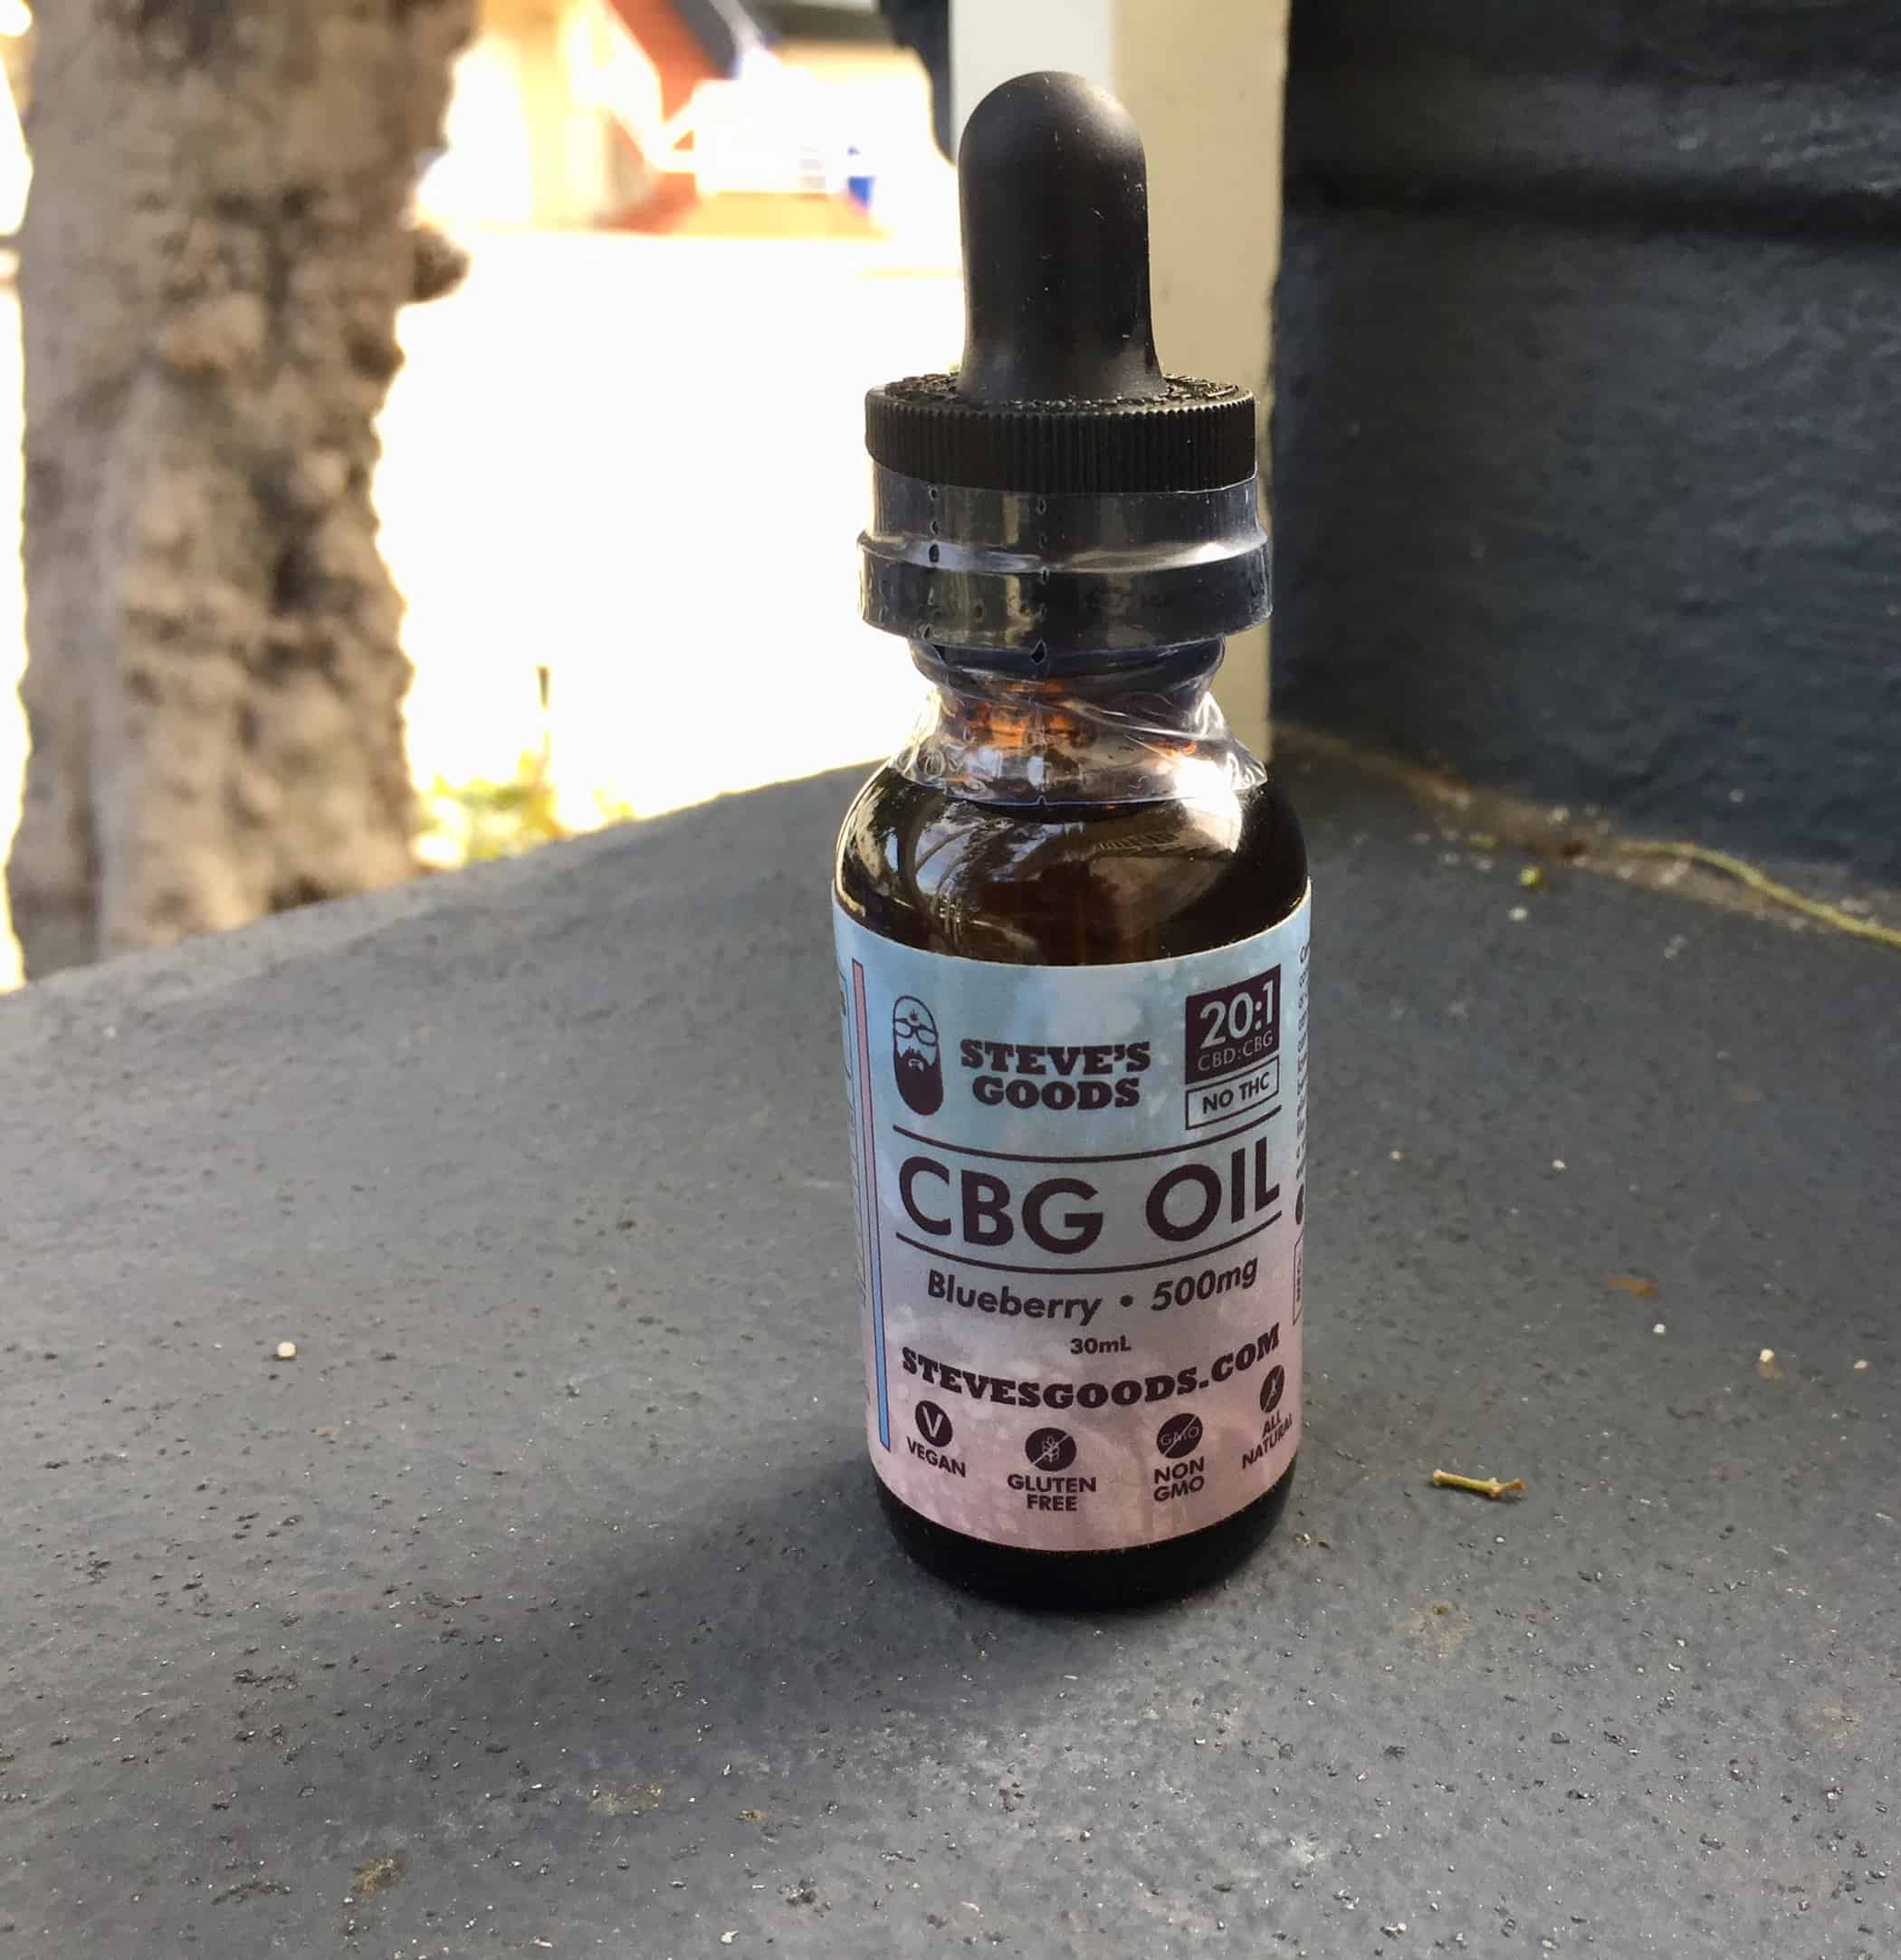 steves goods cbd cbg blueberry oil 20 1 500 mg Save On Cannabis review